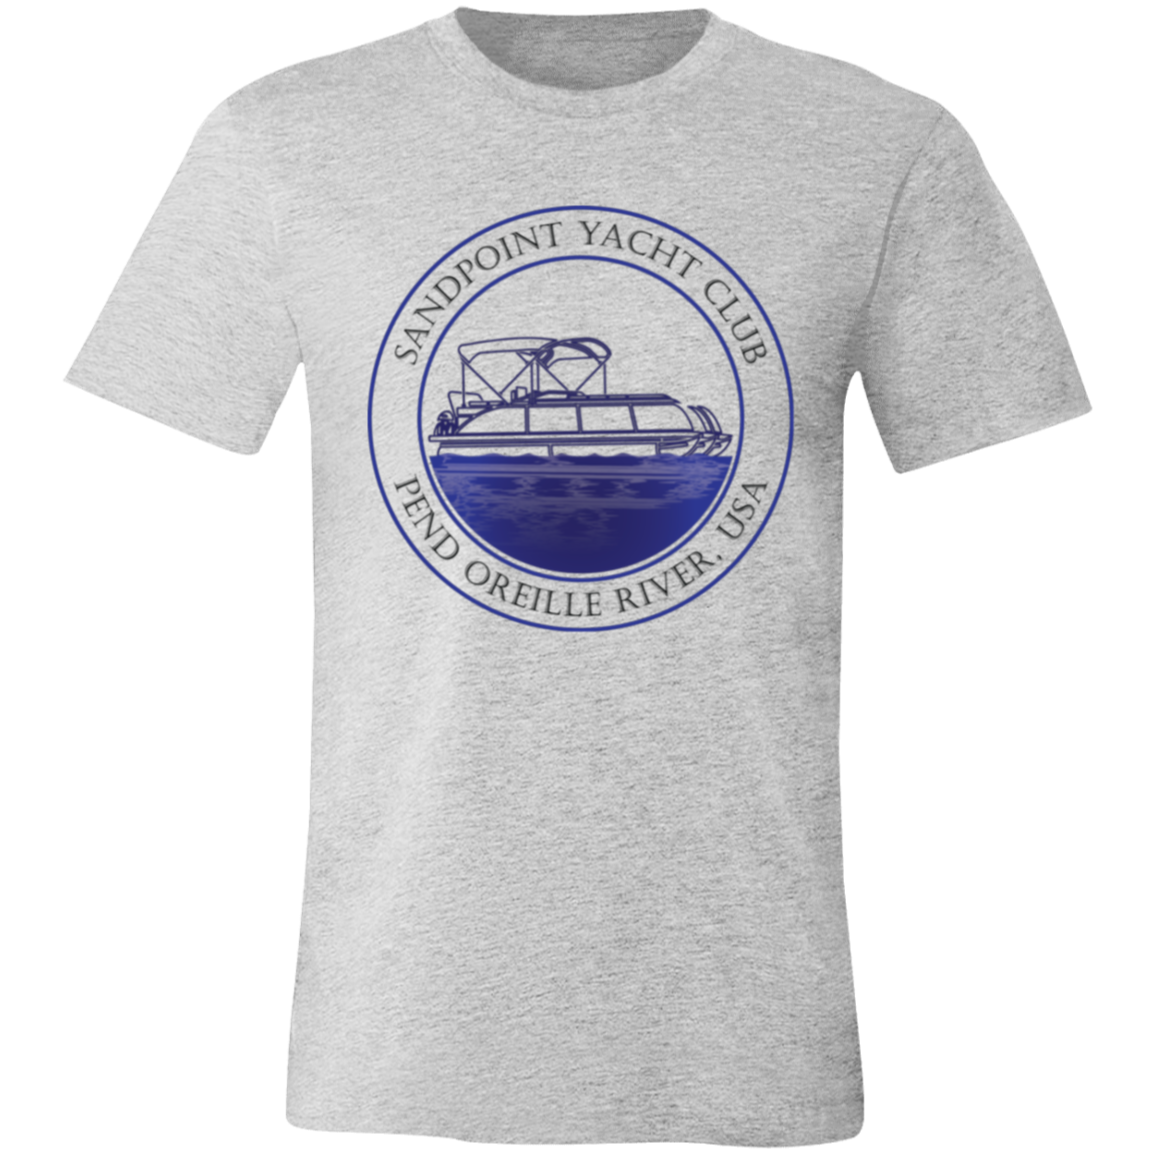 Sandpoint Yacht Club - Shirt